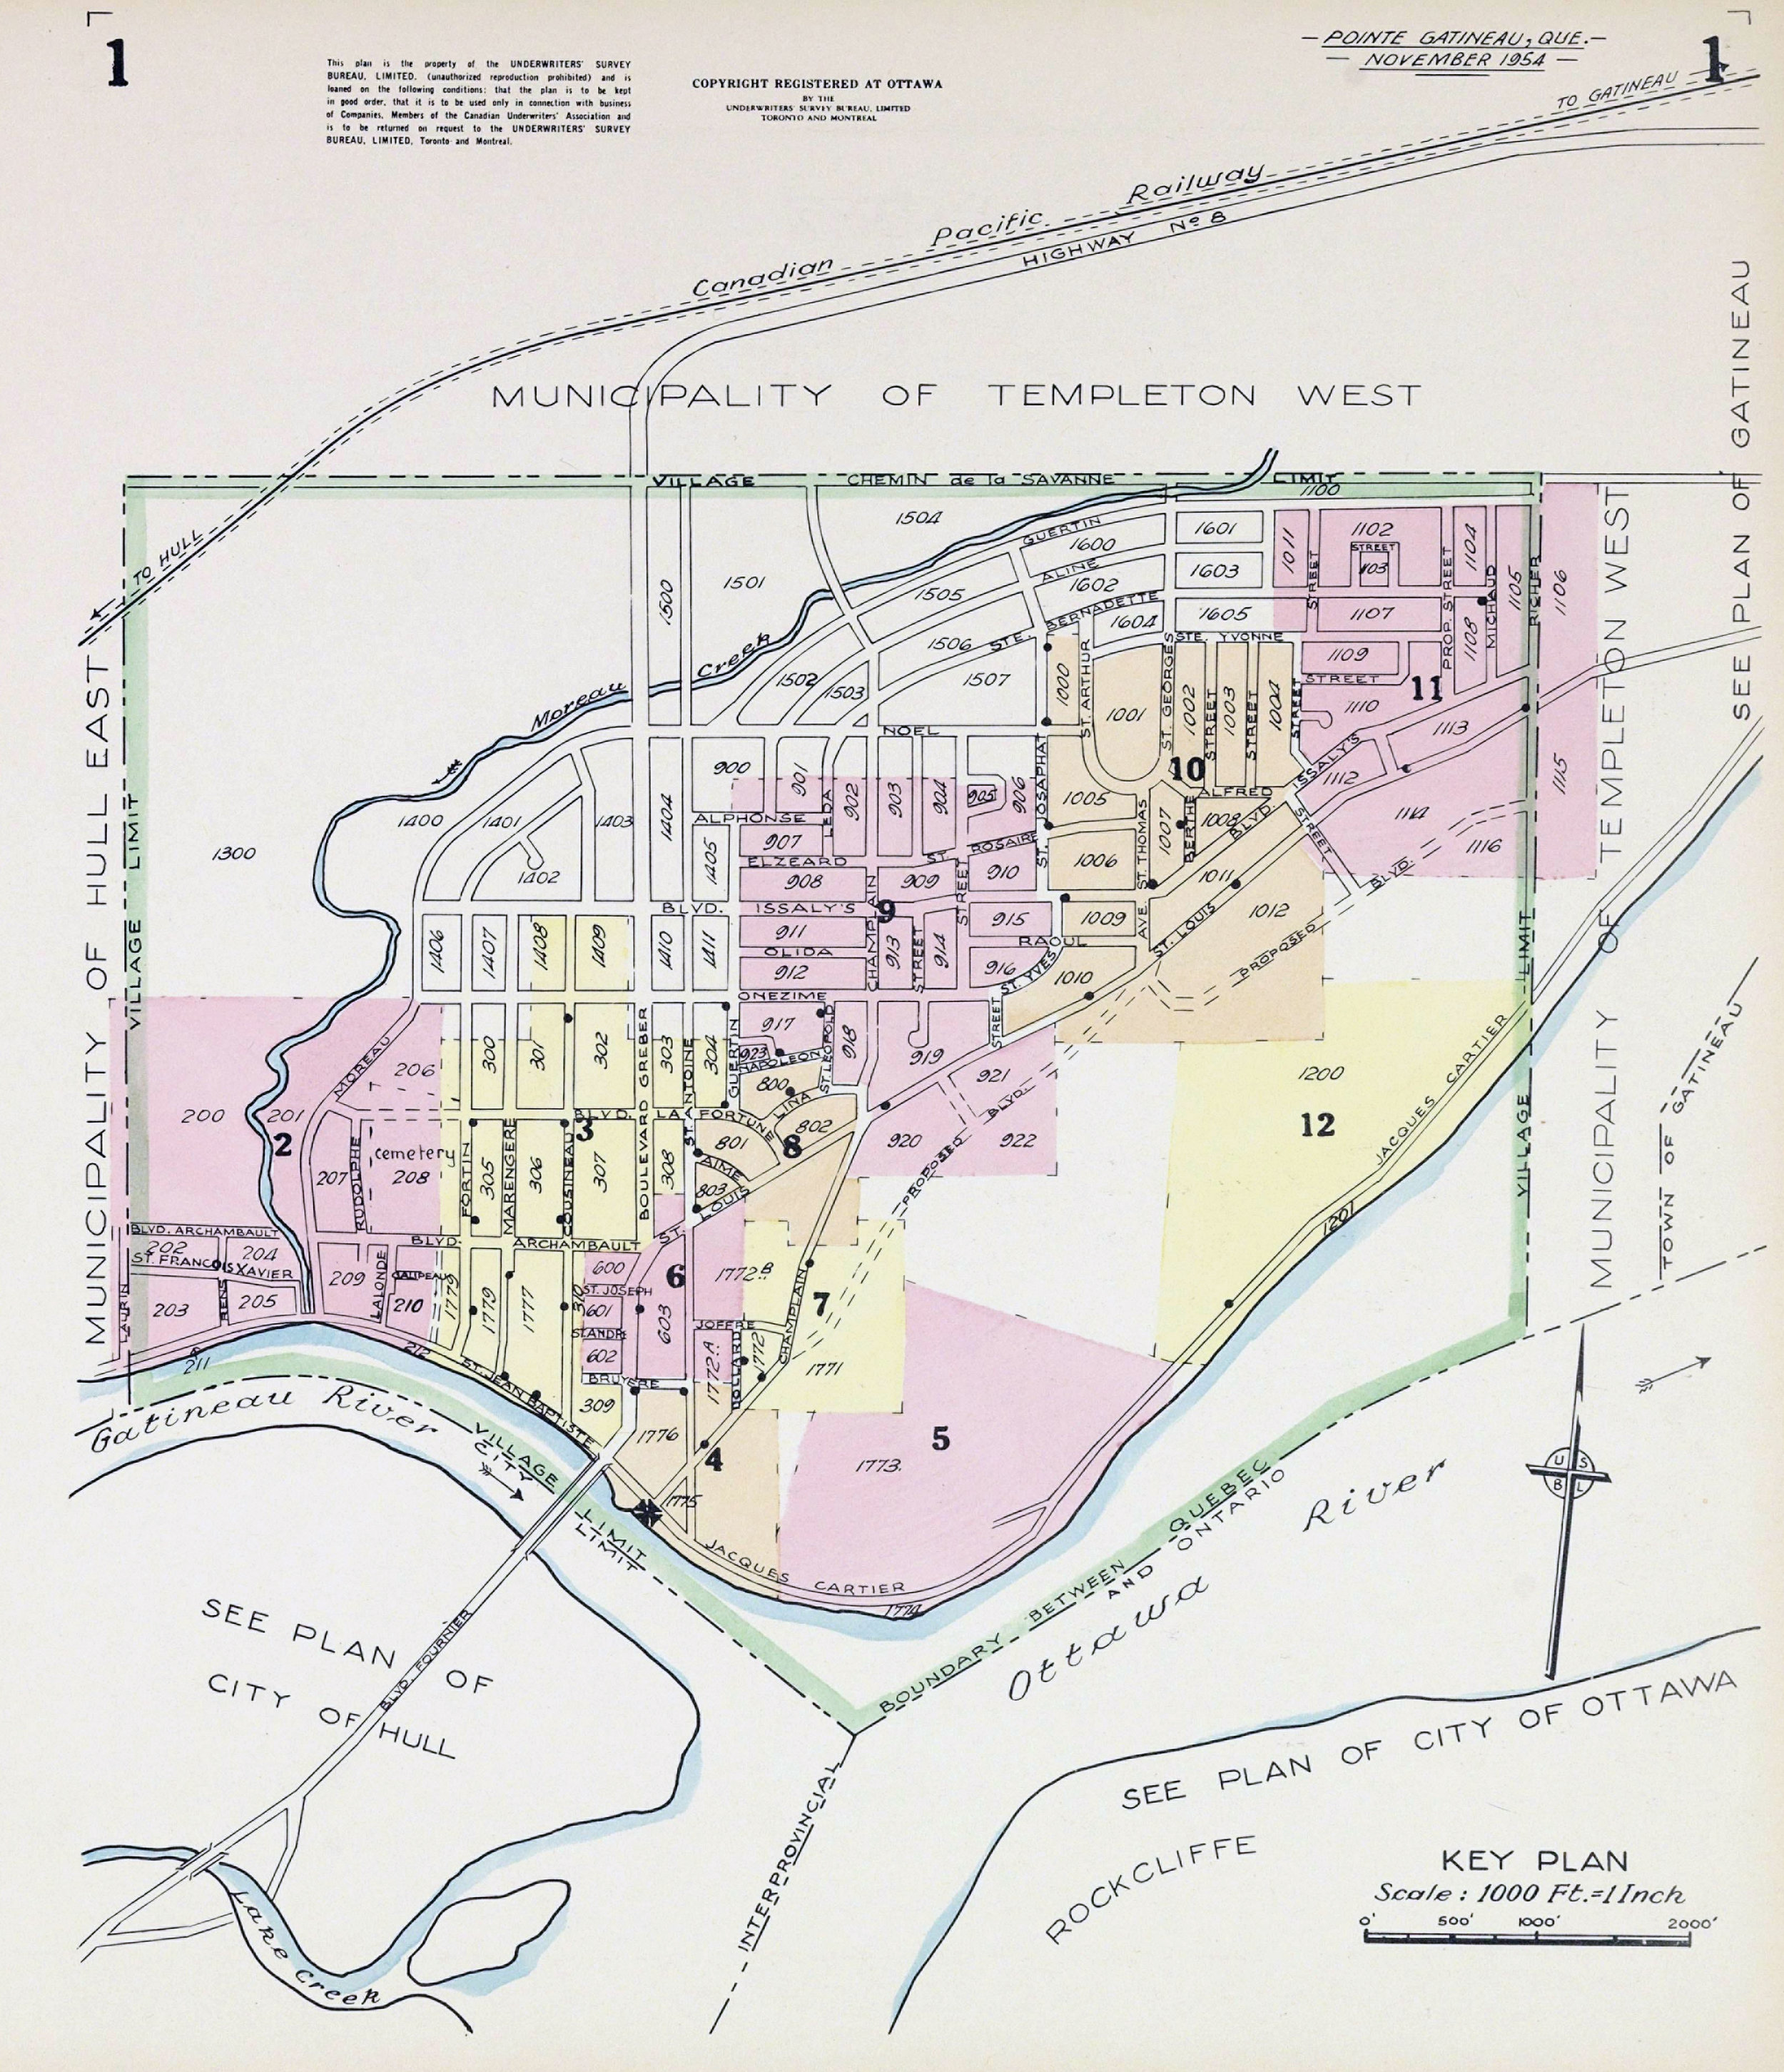 1954 Insurance plan of Pointe Gatineau